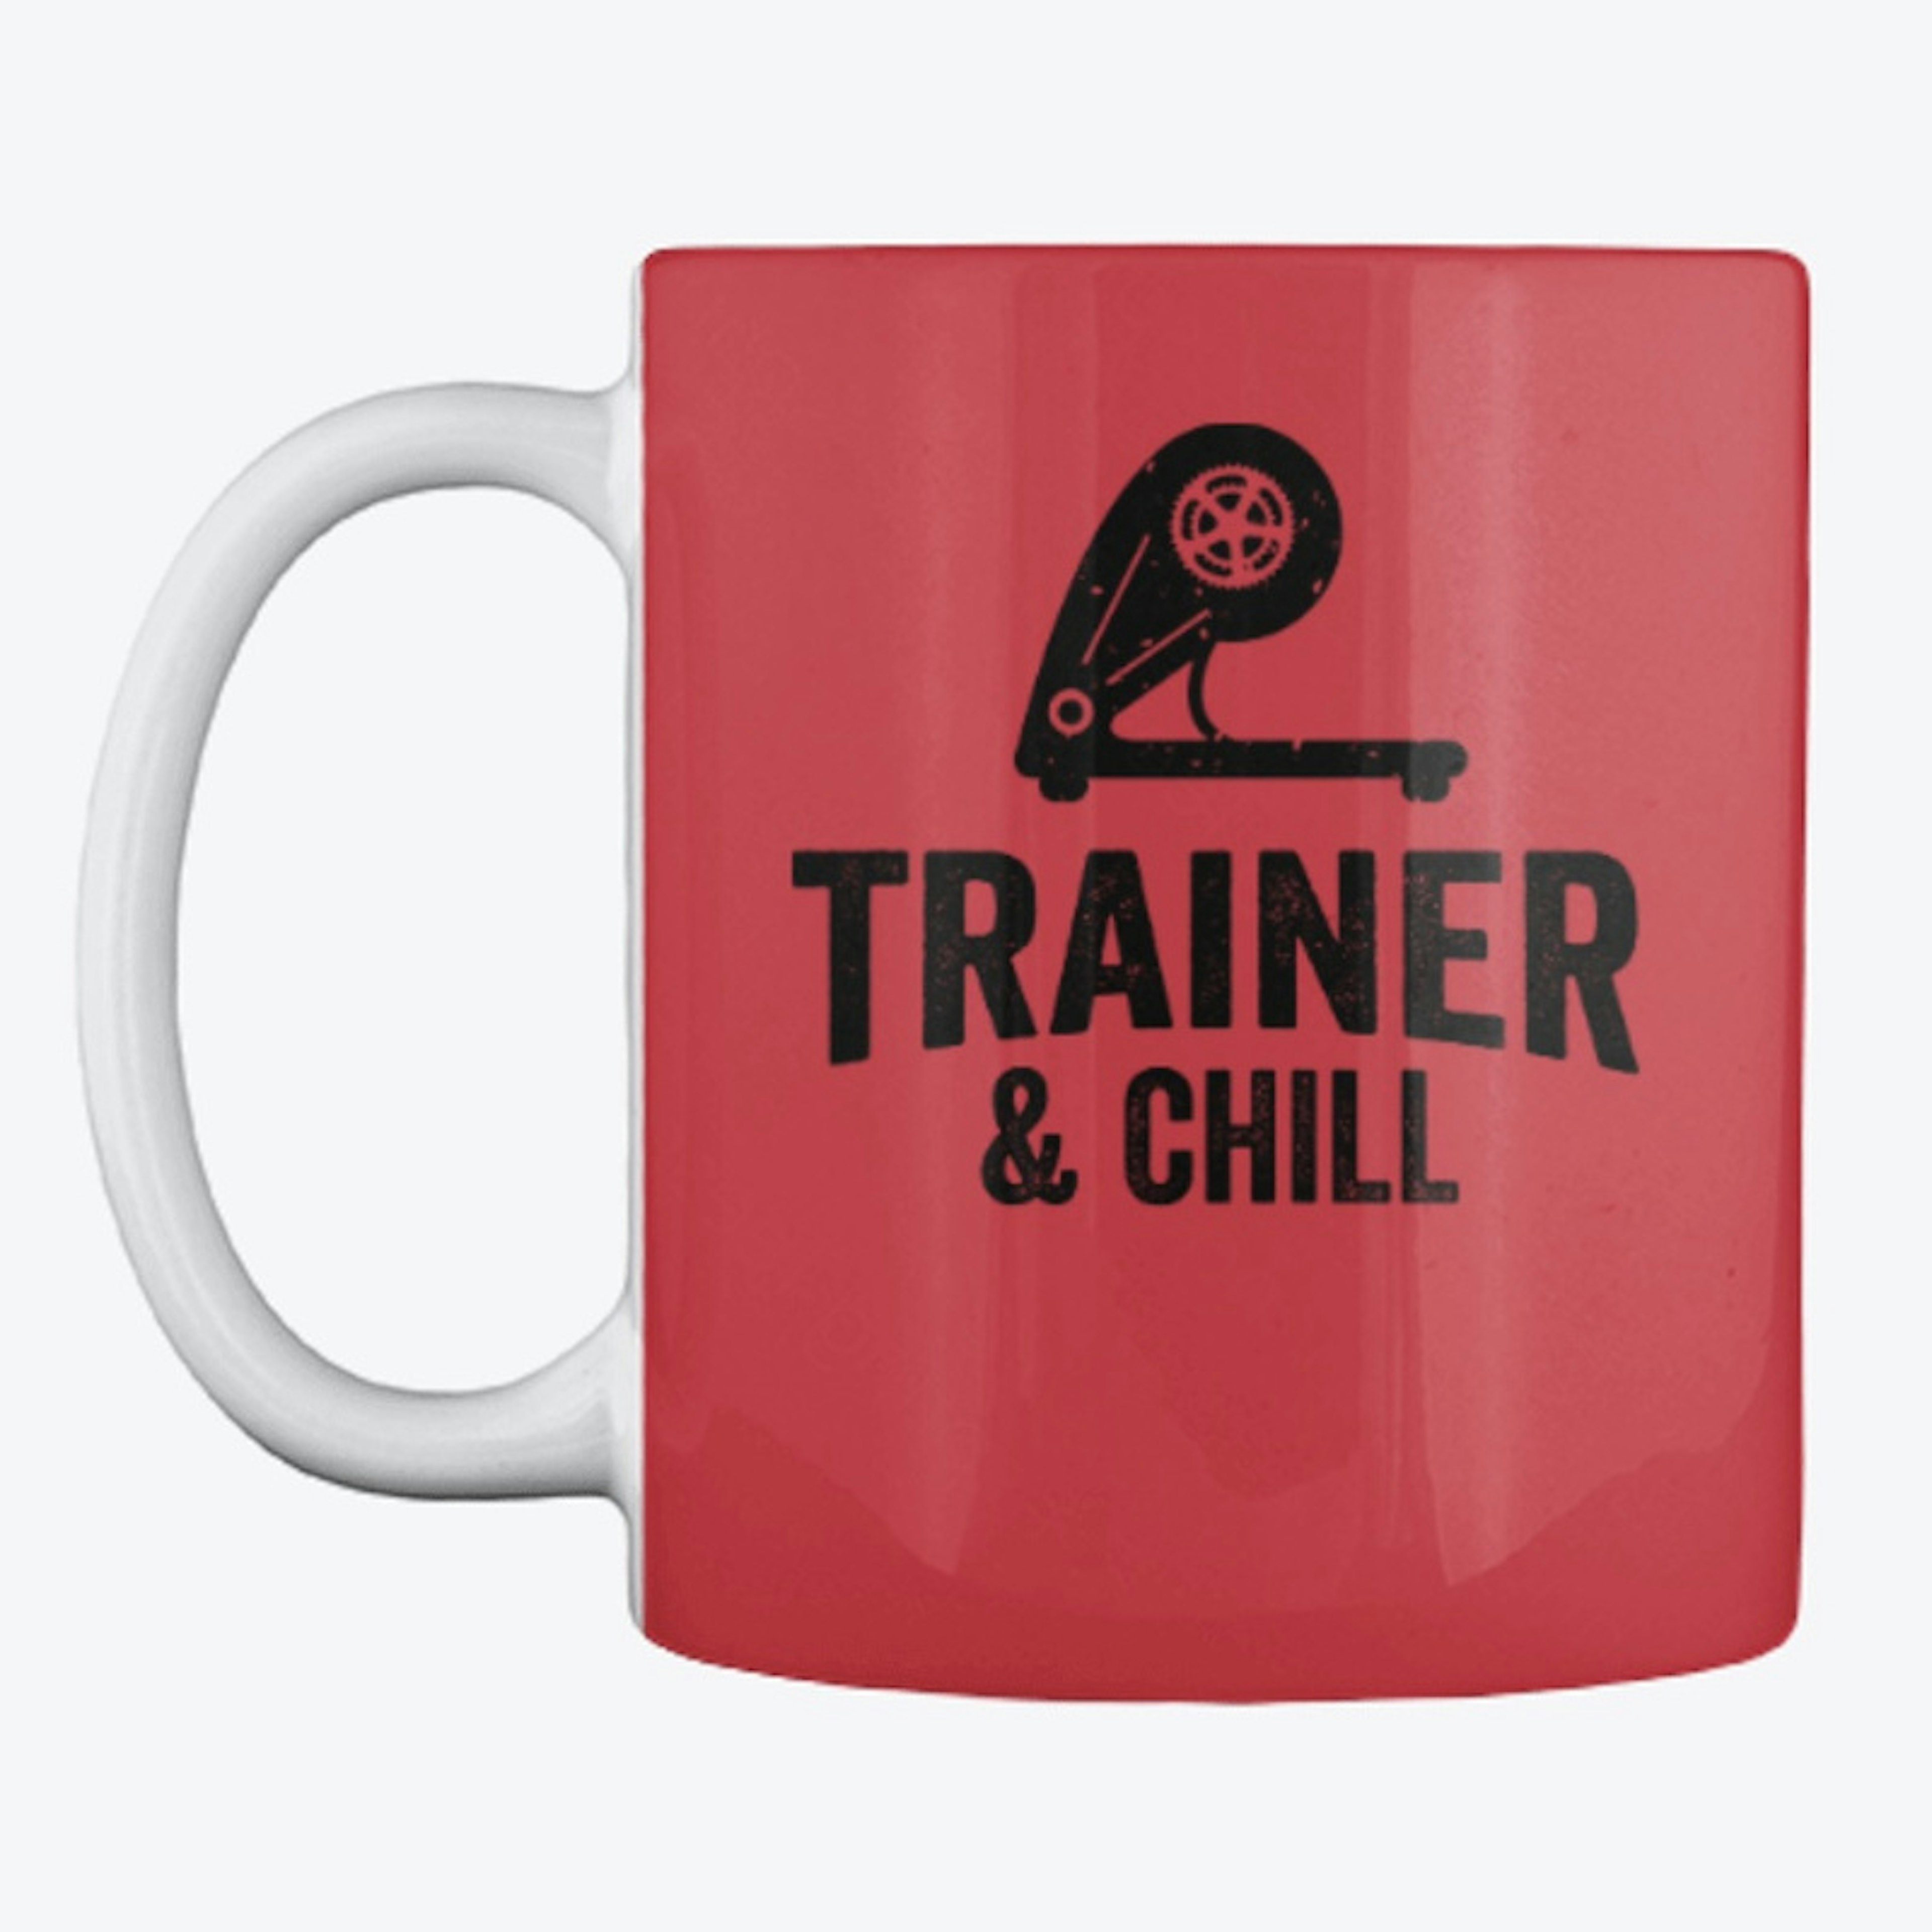 TRAINER & CHILL - Coffee Mug